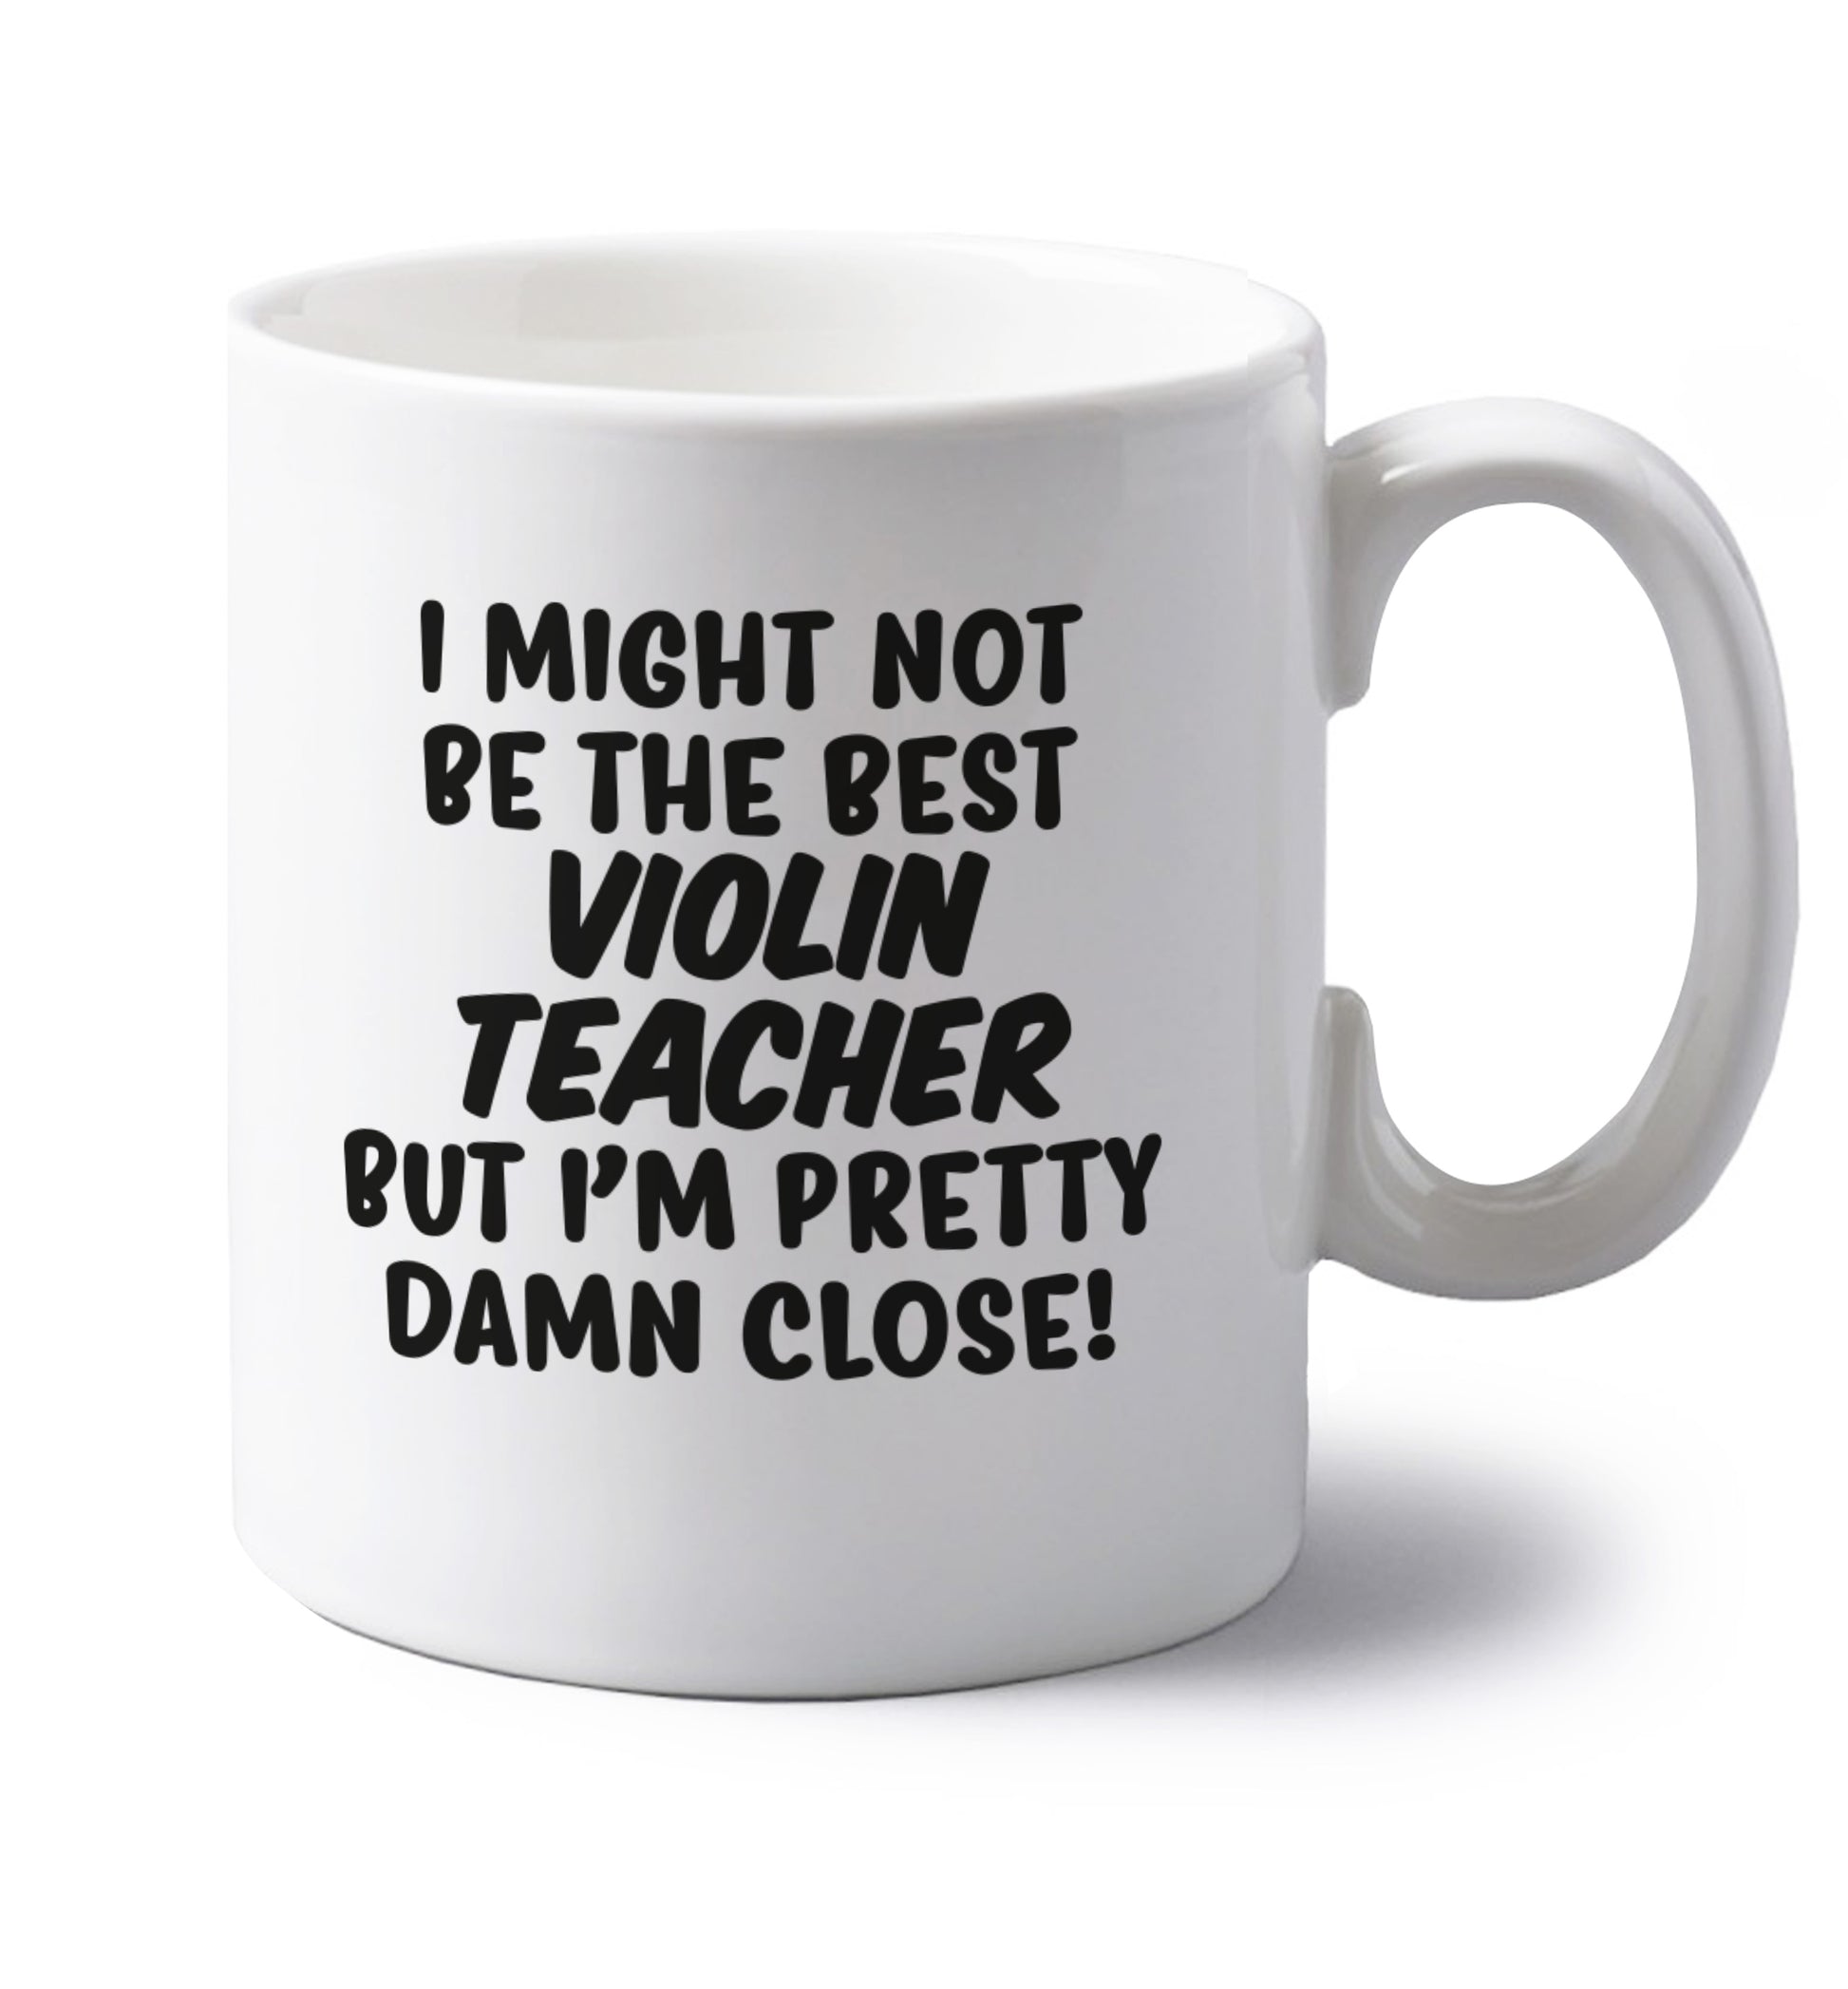 I might not be the best violin teacher but I'm pretty close left handed white ceramic mug 